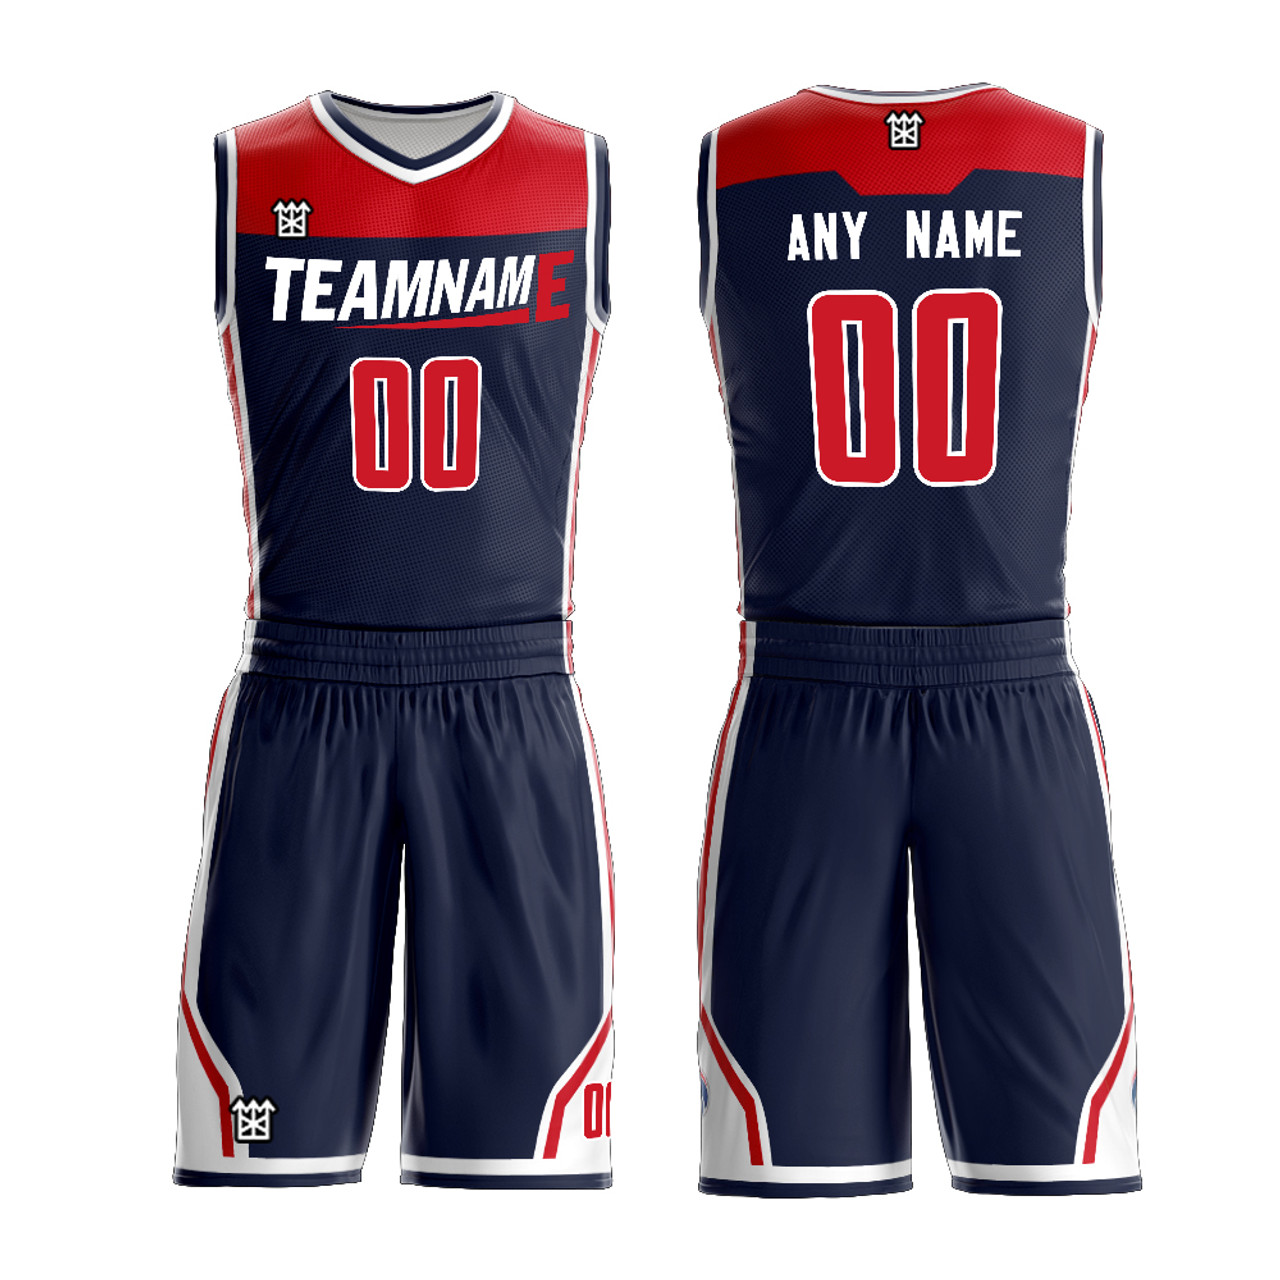 fully customizable basketball jerseys